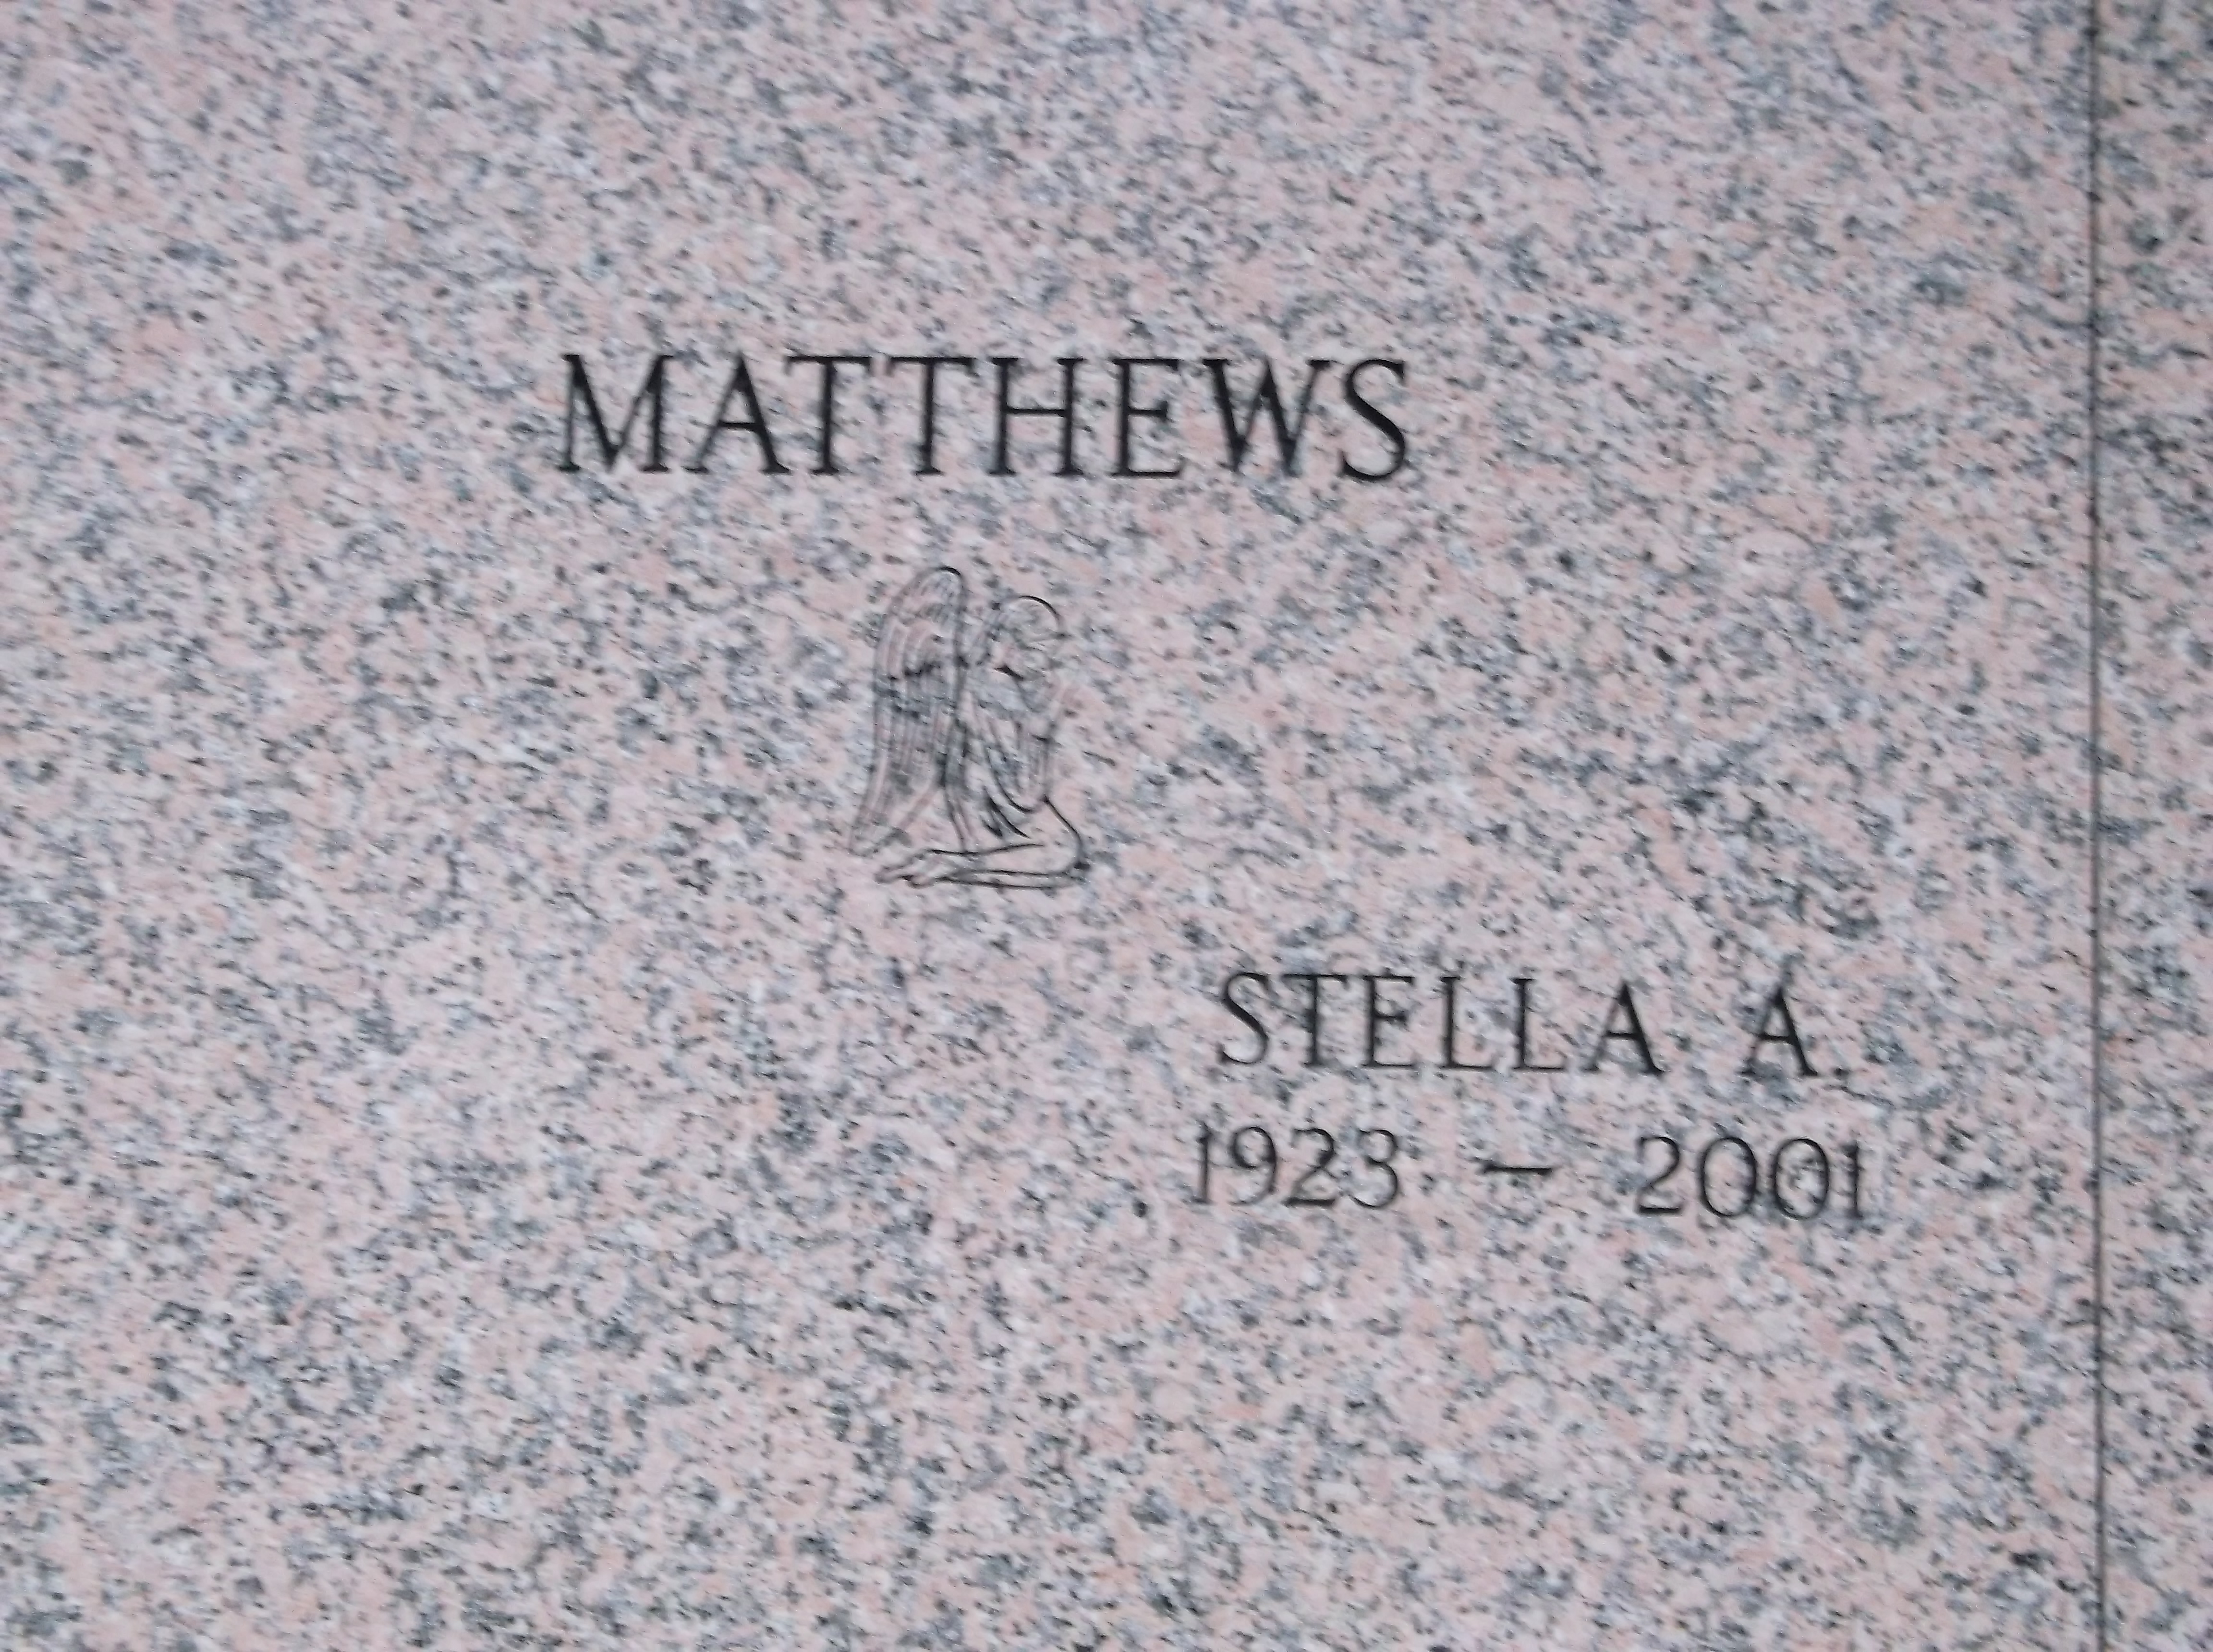 Stella A Matthews